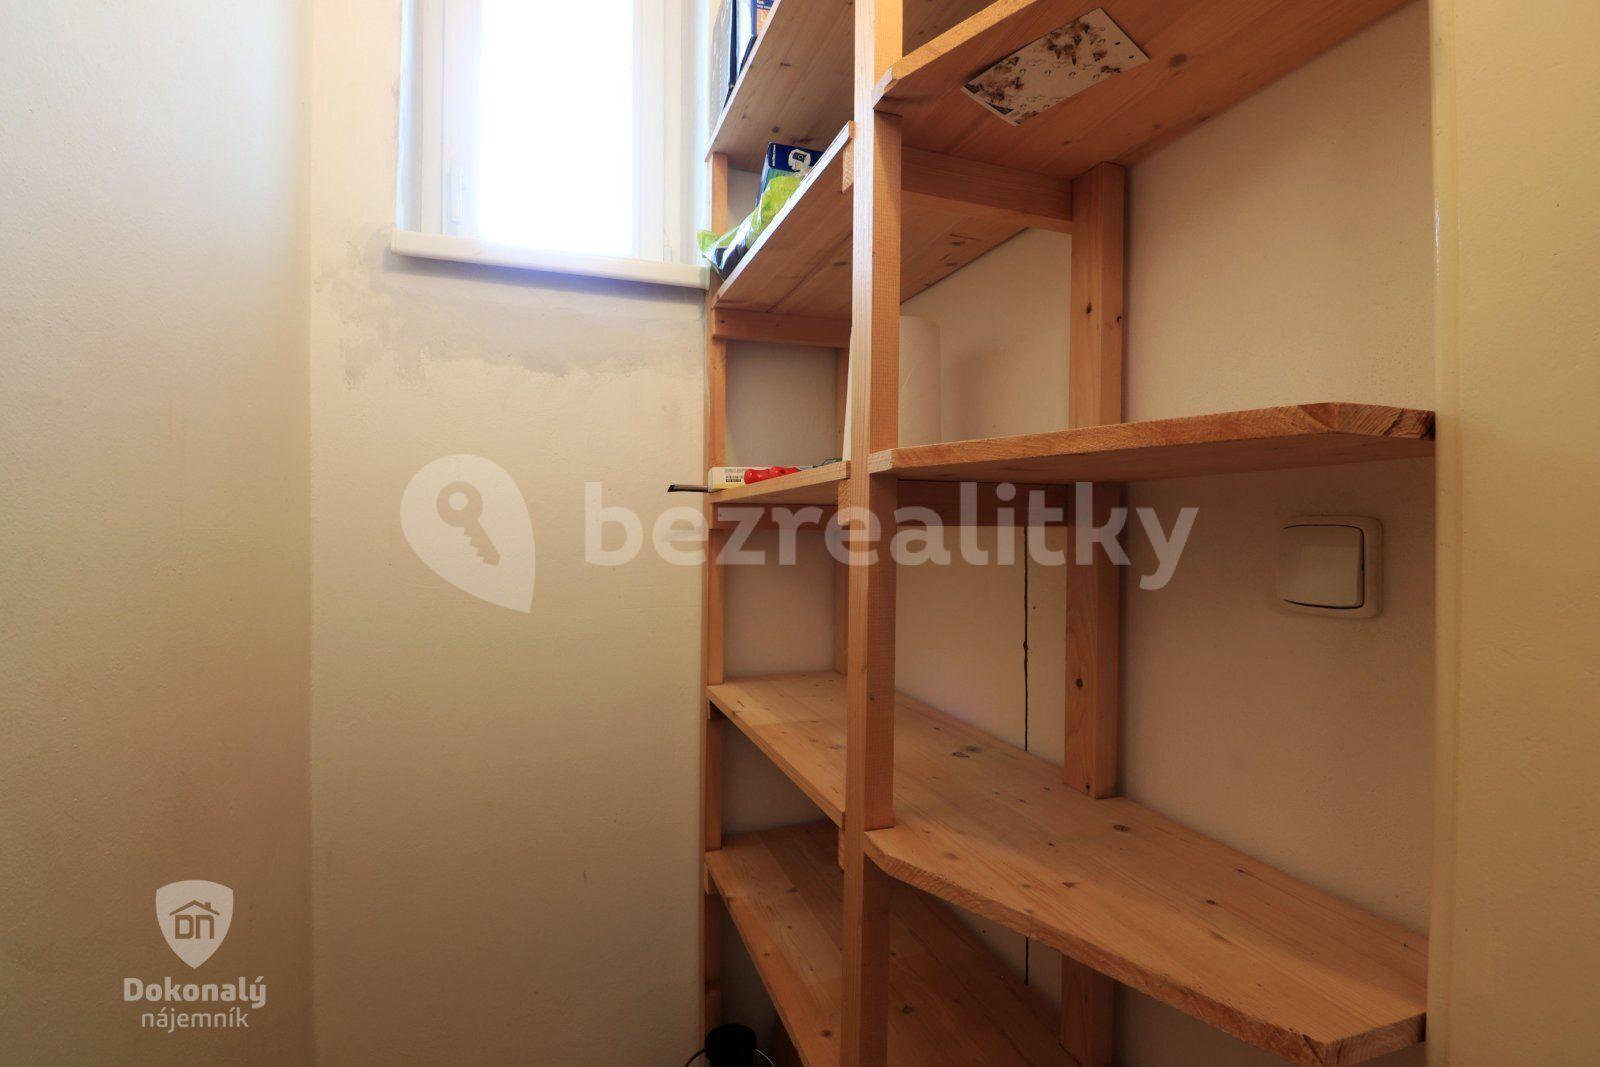 2 bedroom flat to rent, 83 m², Sudoměřská, Prague, Prague